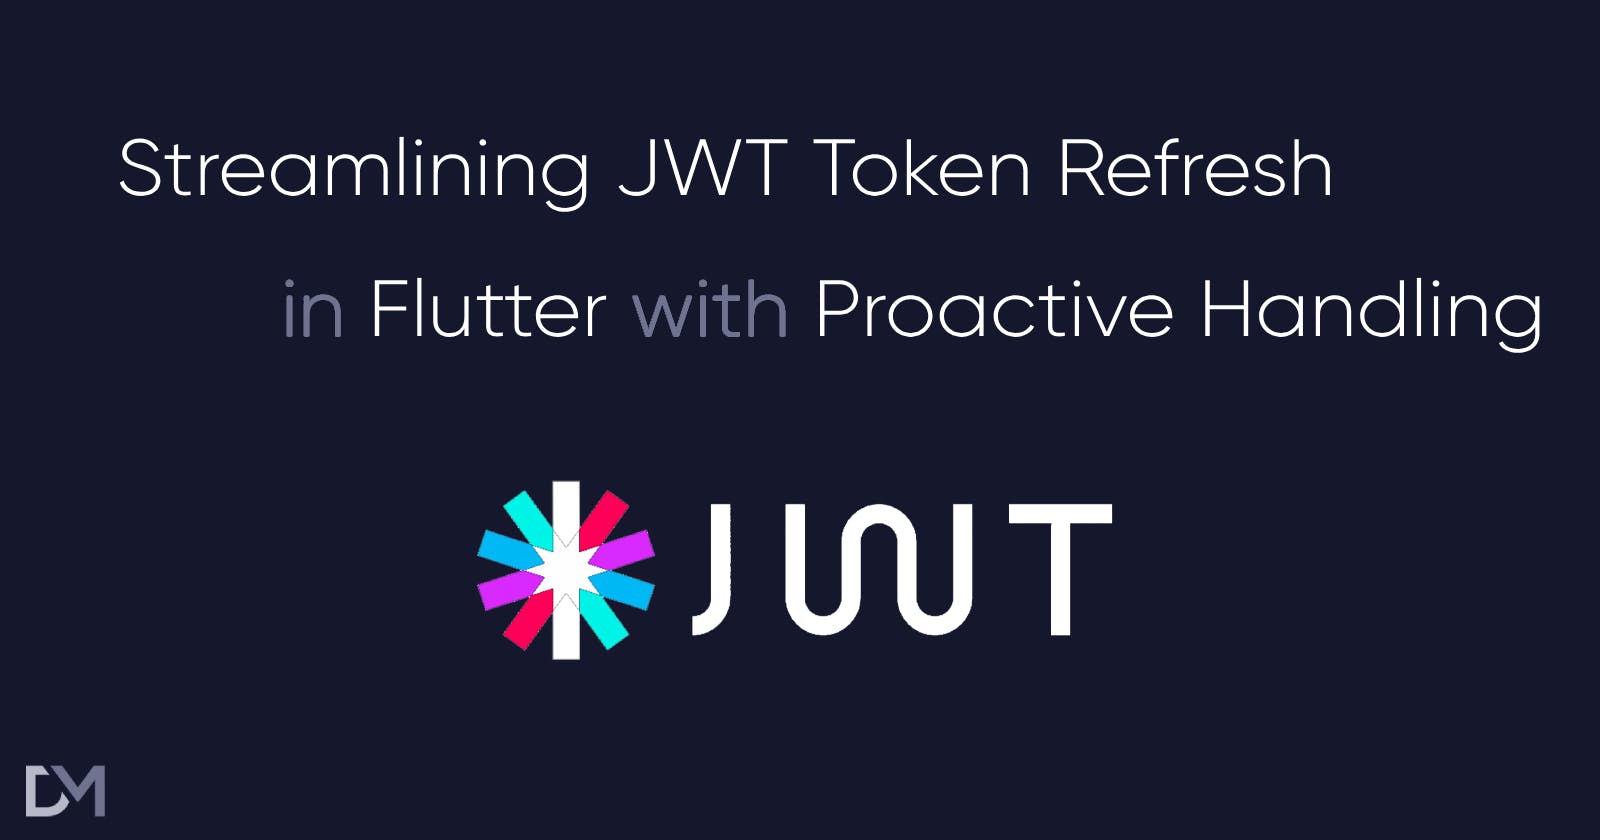 Streamlining JWT Token Refresh in Flutter with Proactive Handling